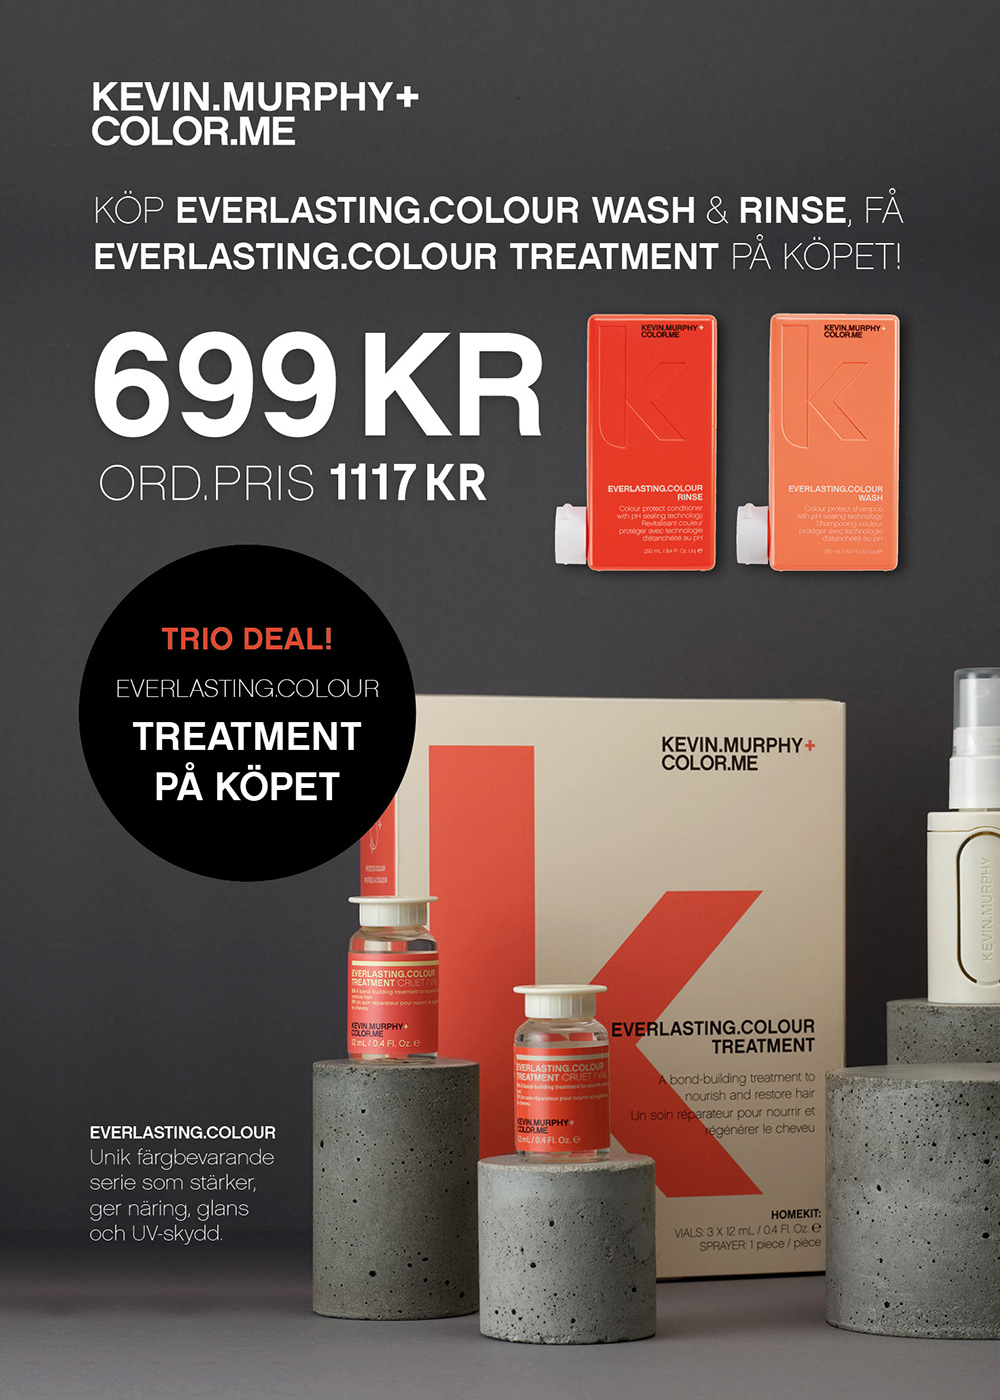 Kevin Murphy Everlasting Colour DUO - Treatment p kpet! - Hairsale.se